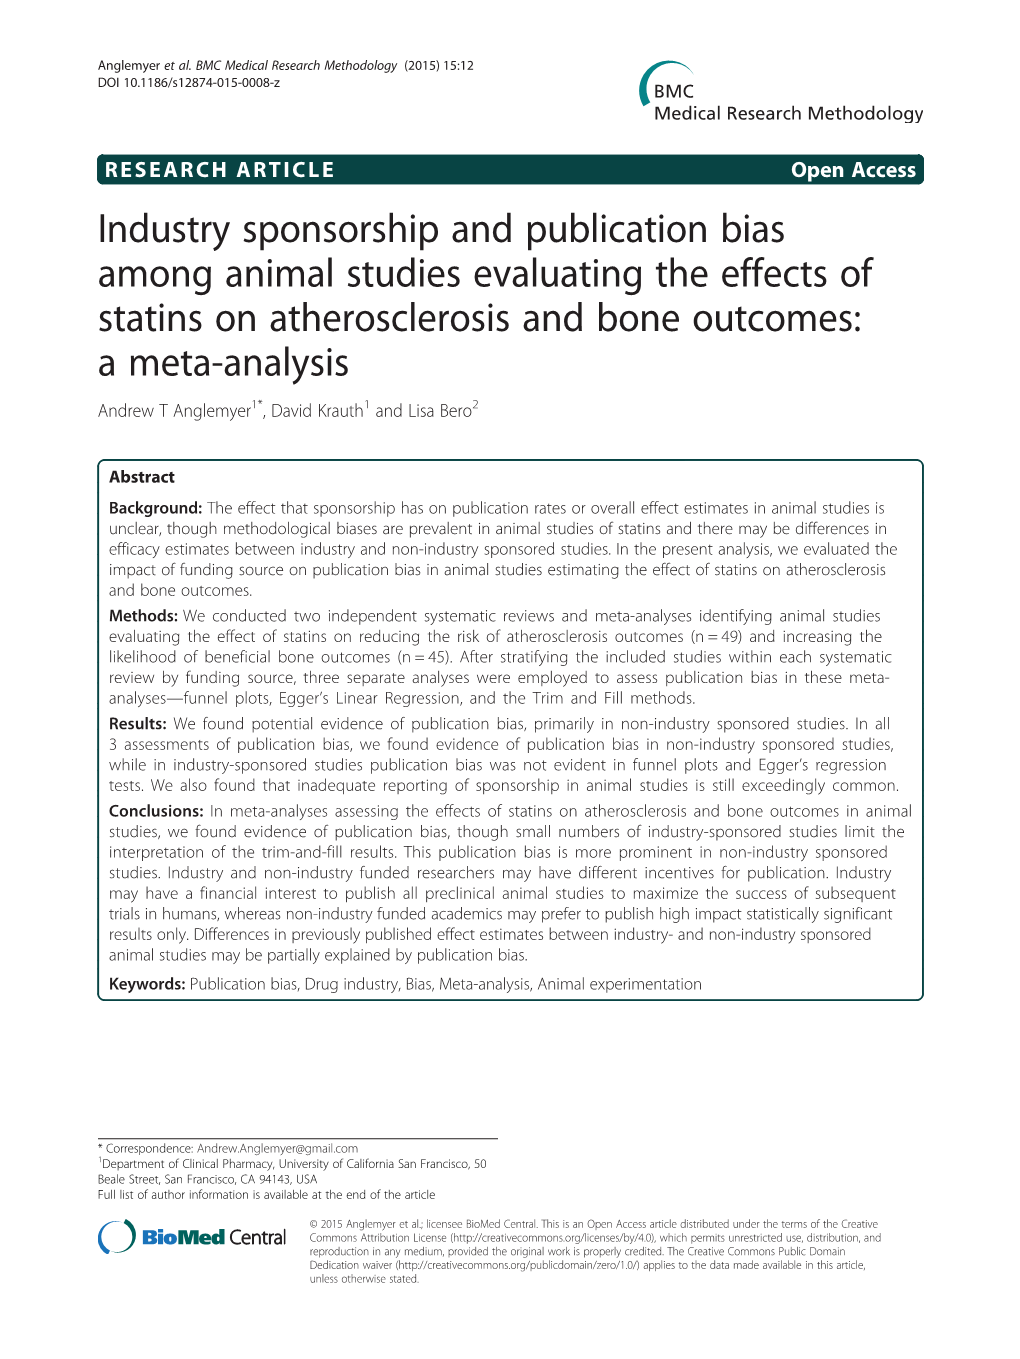 Industry Sponsorship and Publication Bias Among Animal